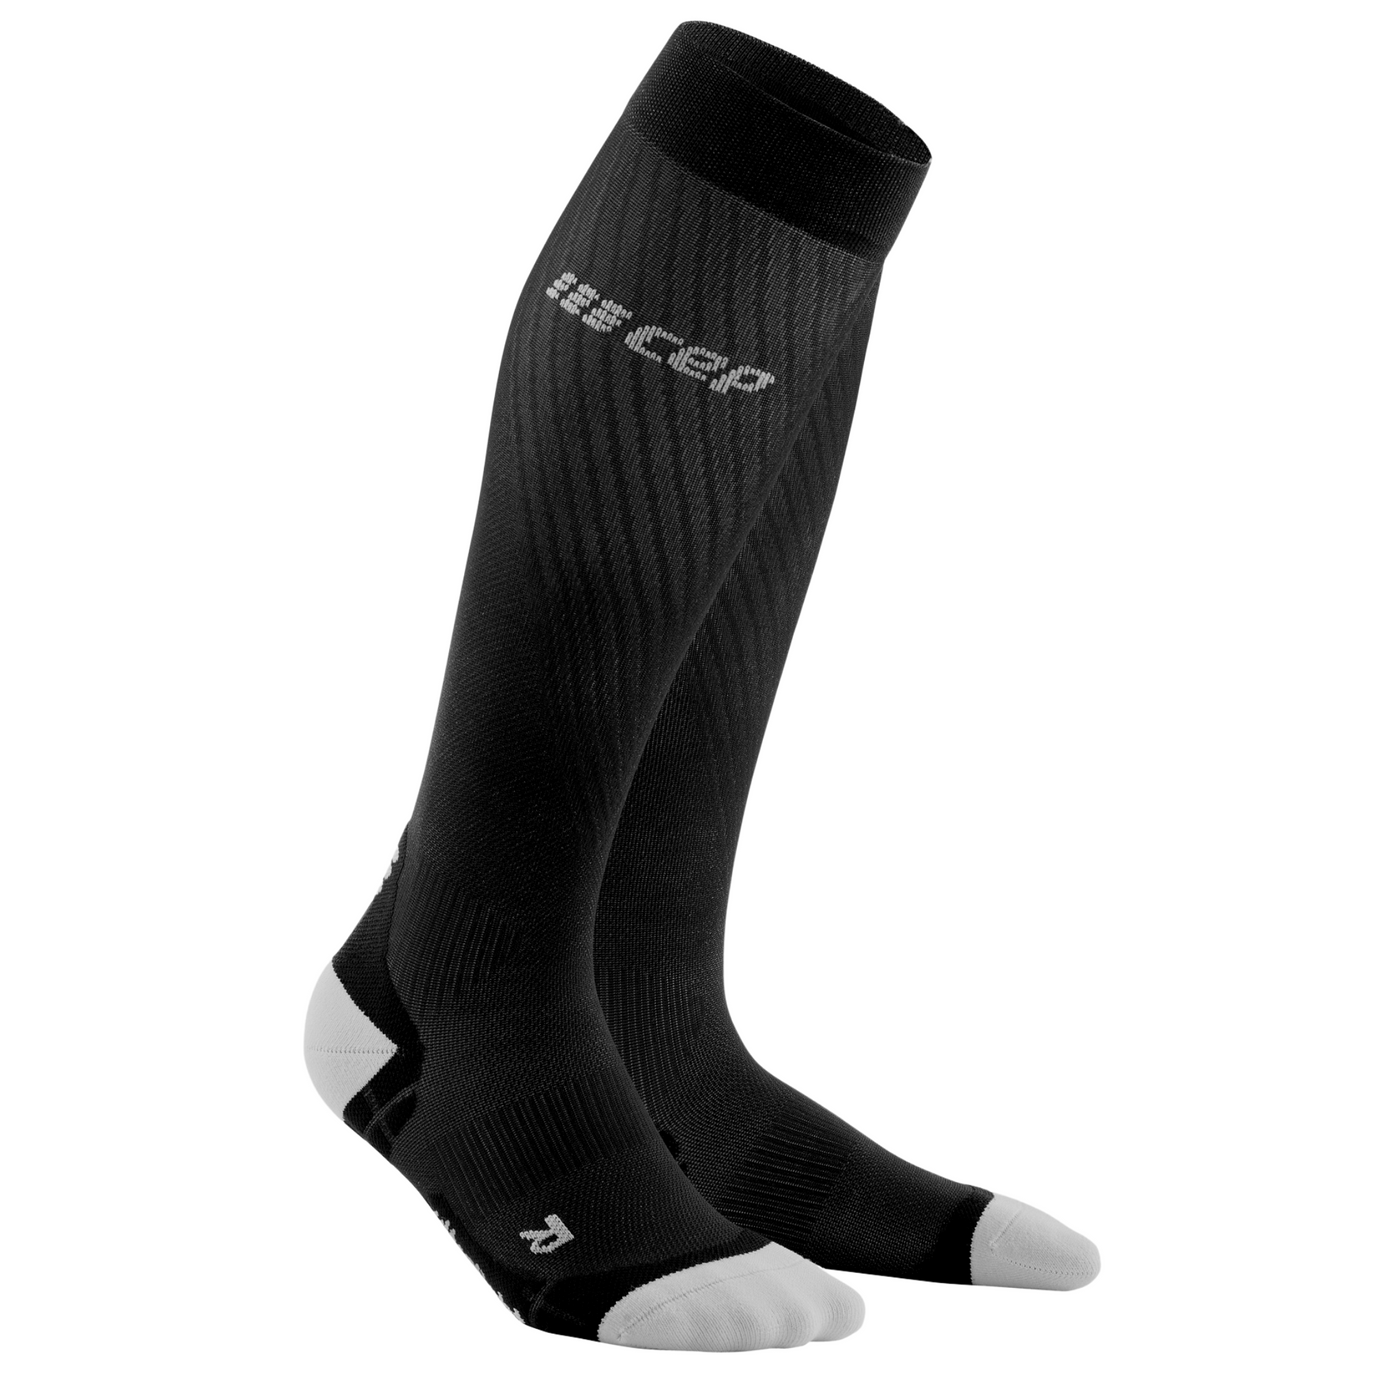 Ultralight Tall Compression Socks, Women, Black/Light Grey, Front View